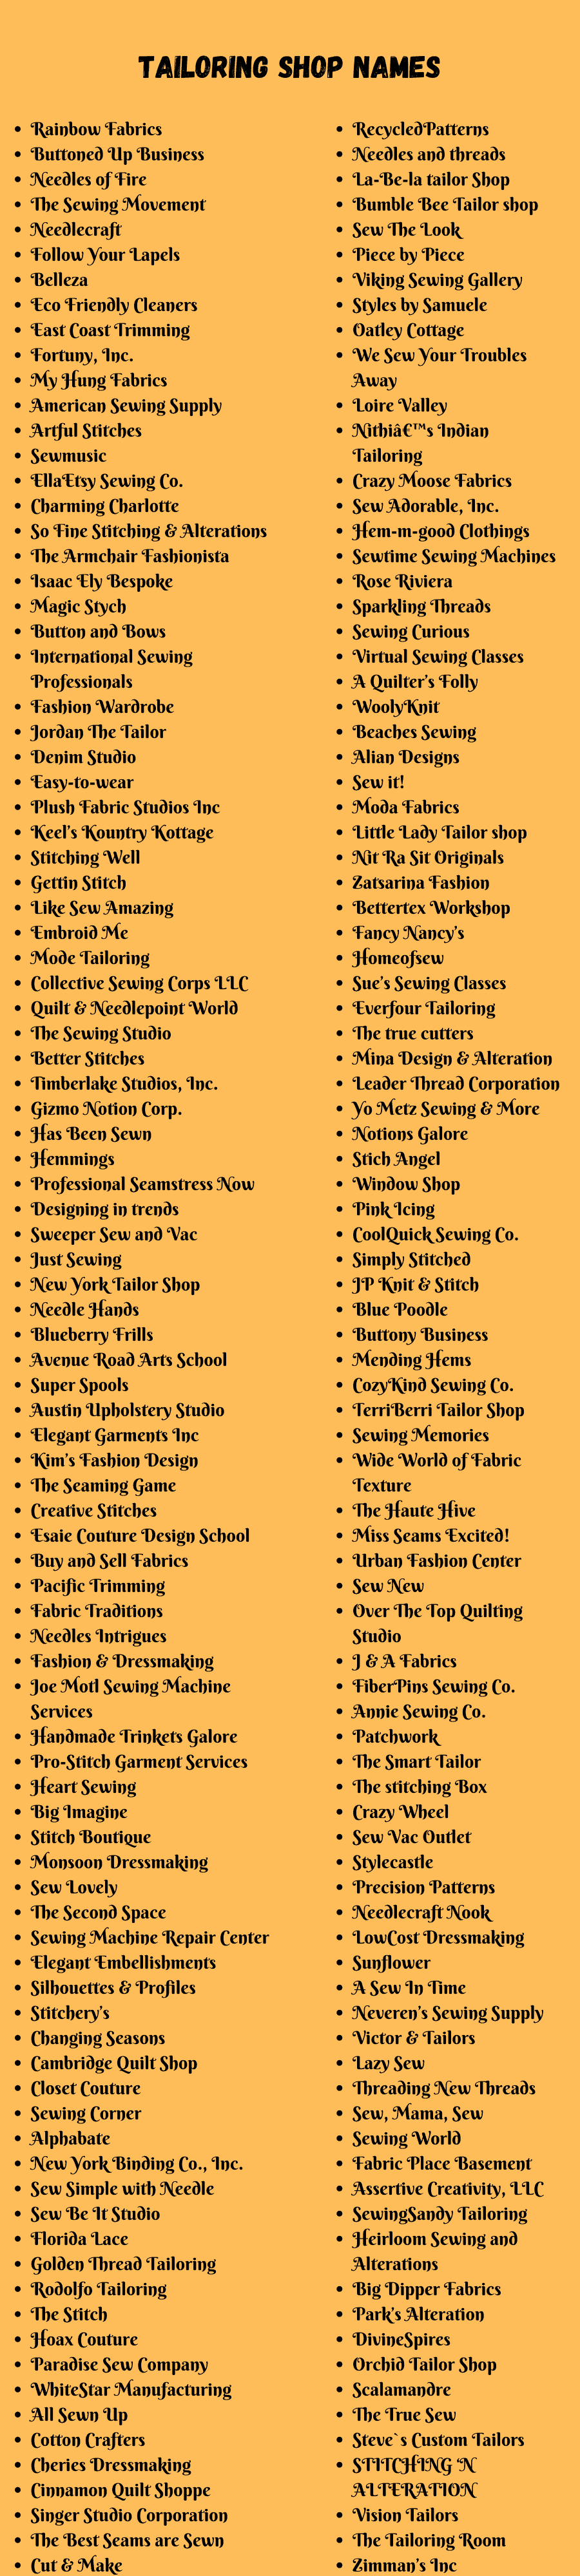 Tailoring Shop Names